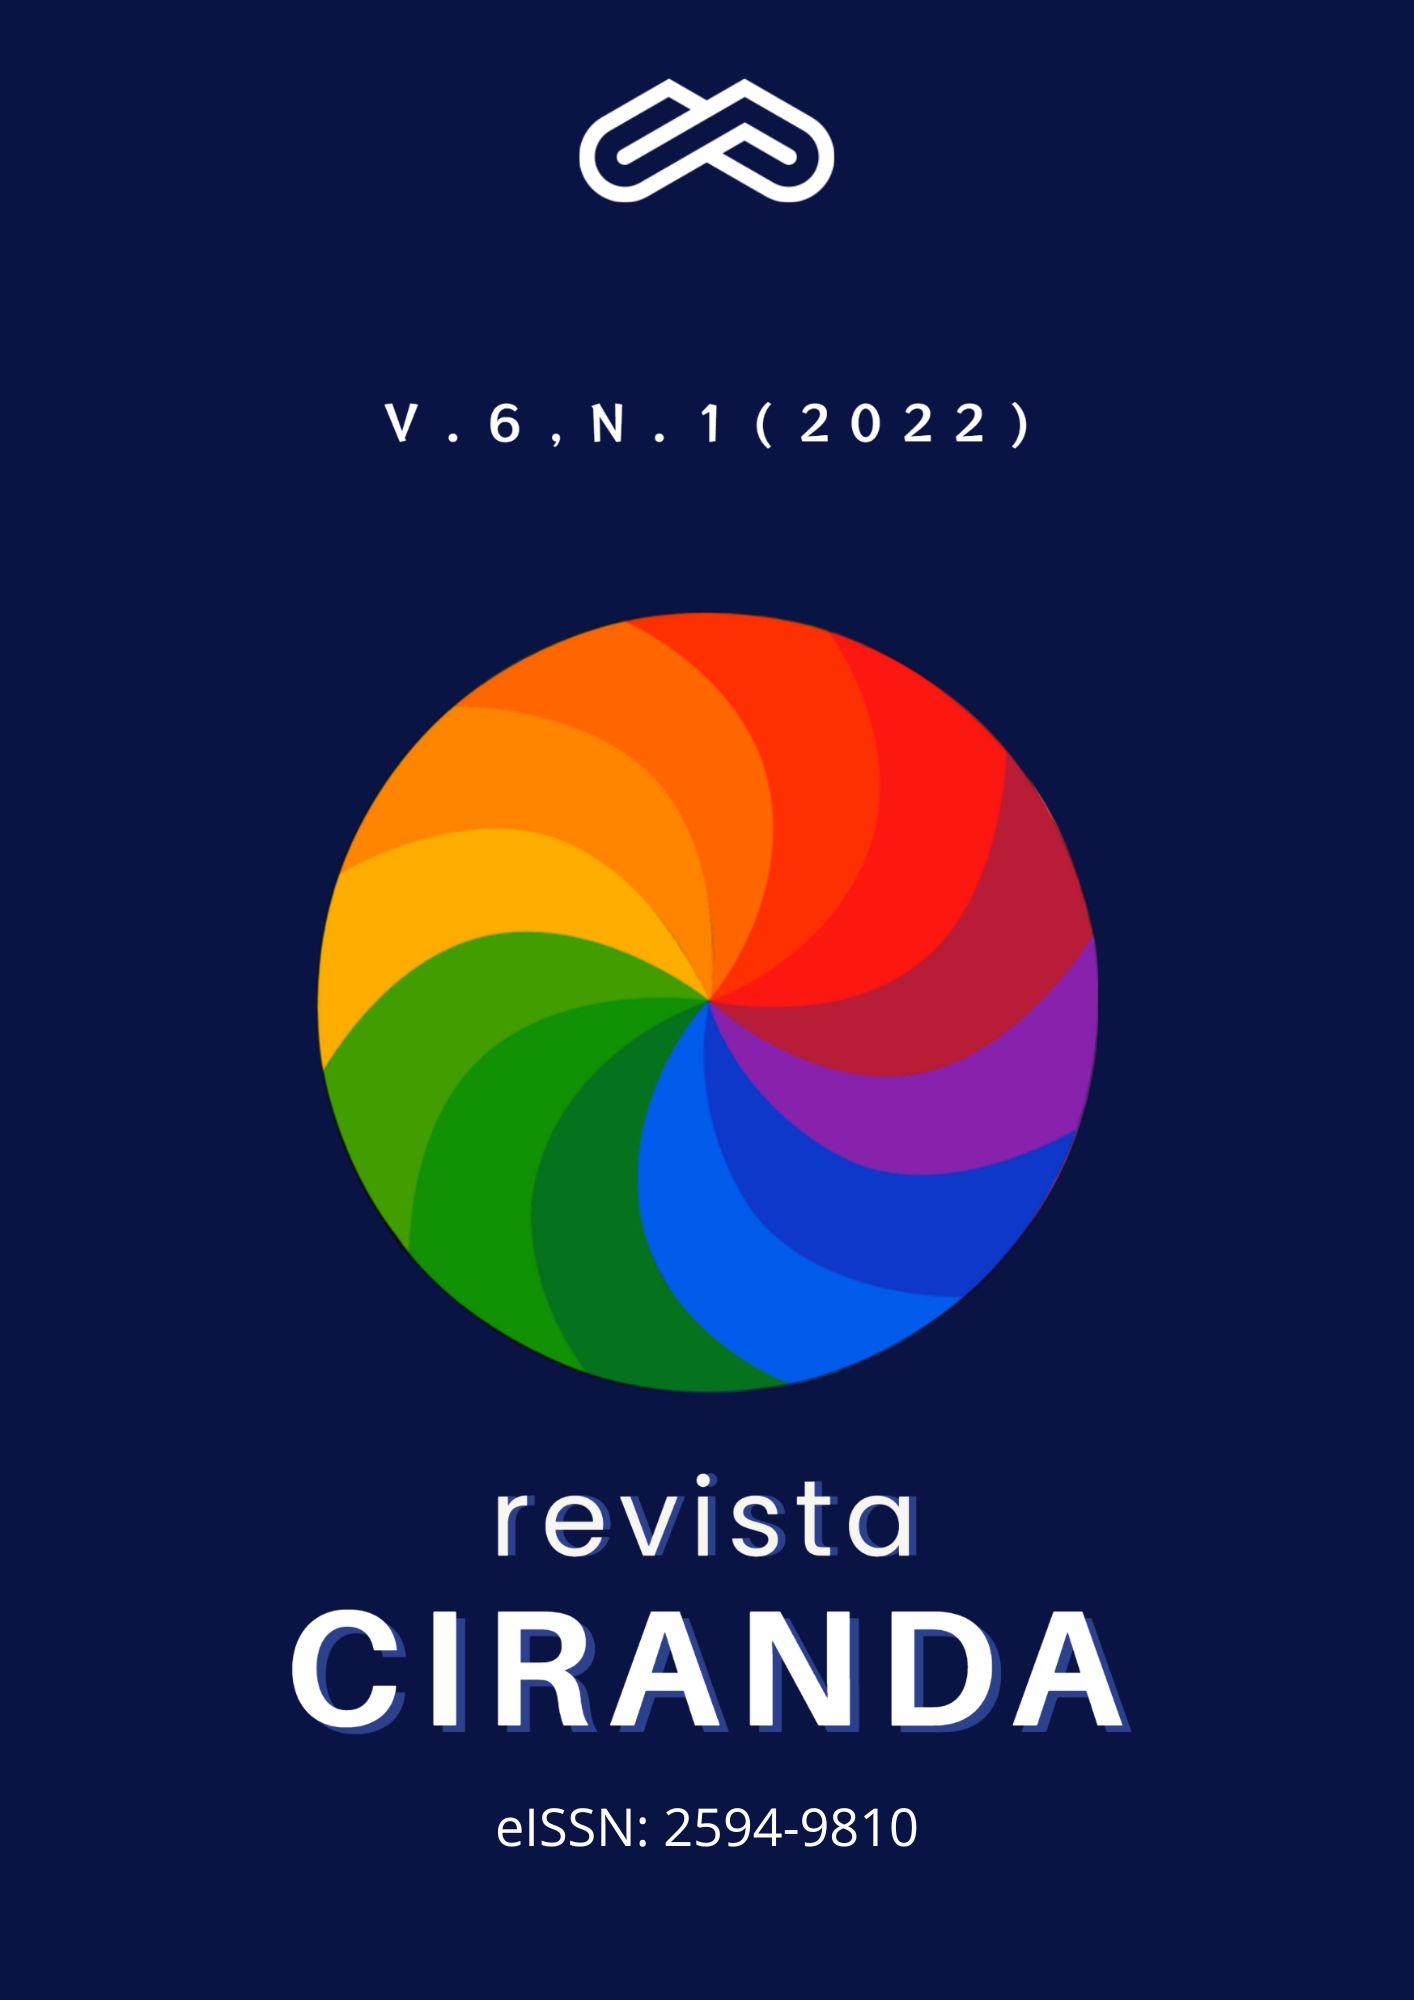 					Visualizar v. 6 n. 01 (2022): REVISTA CIRANDA
				